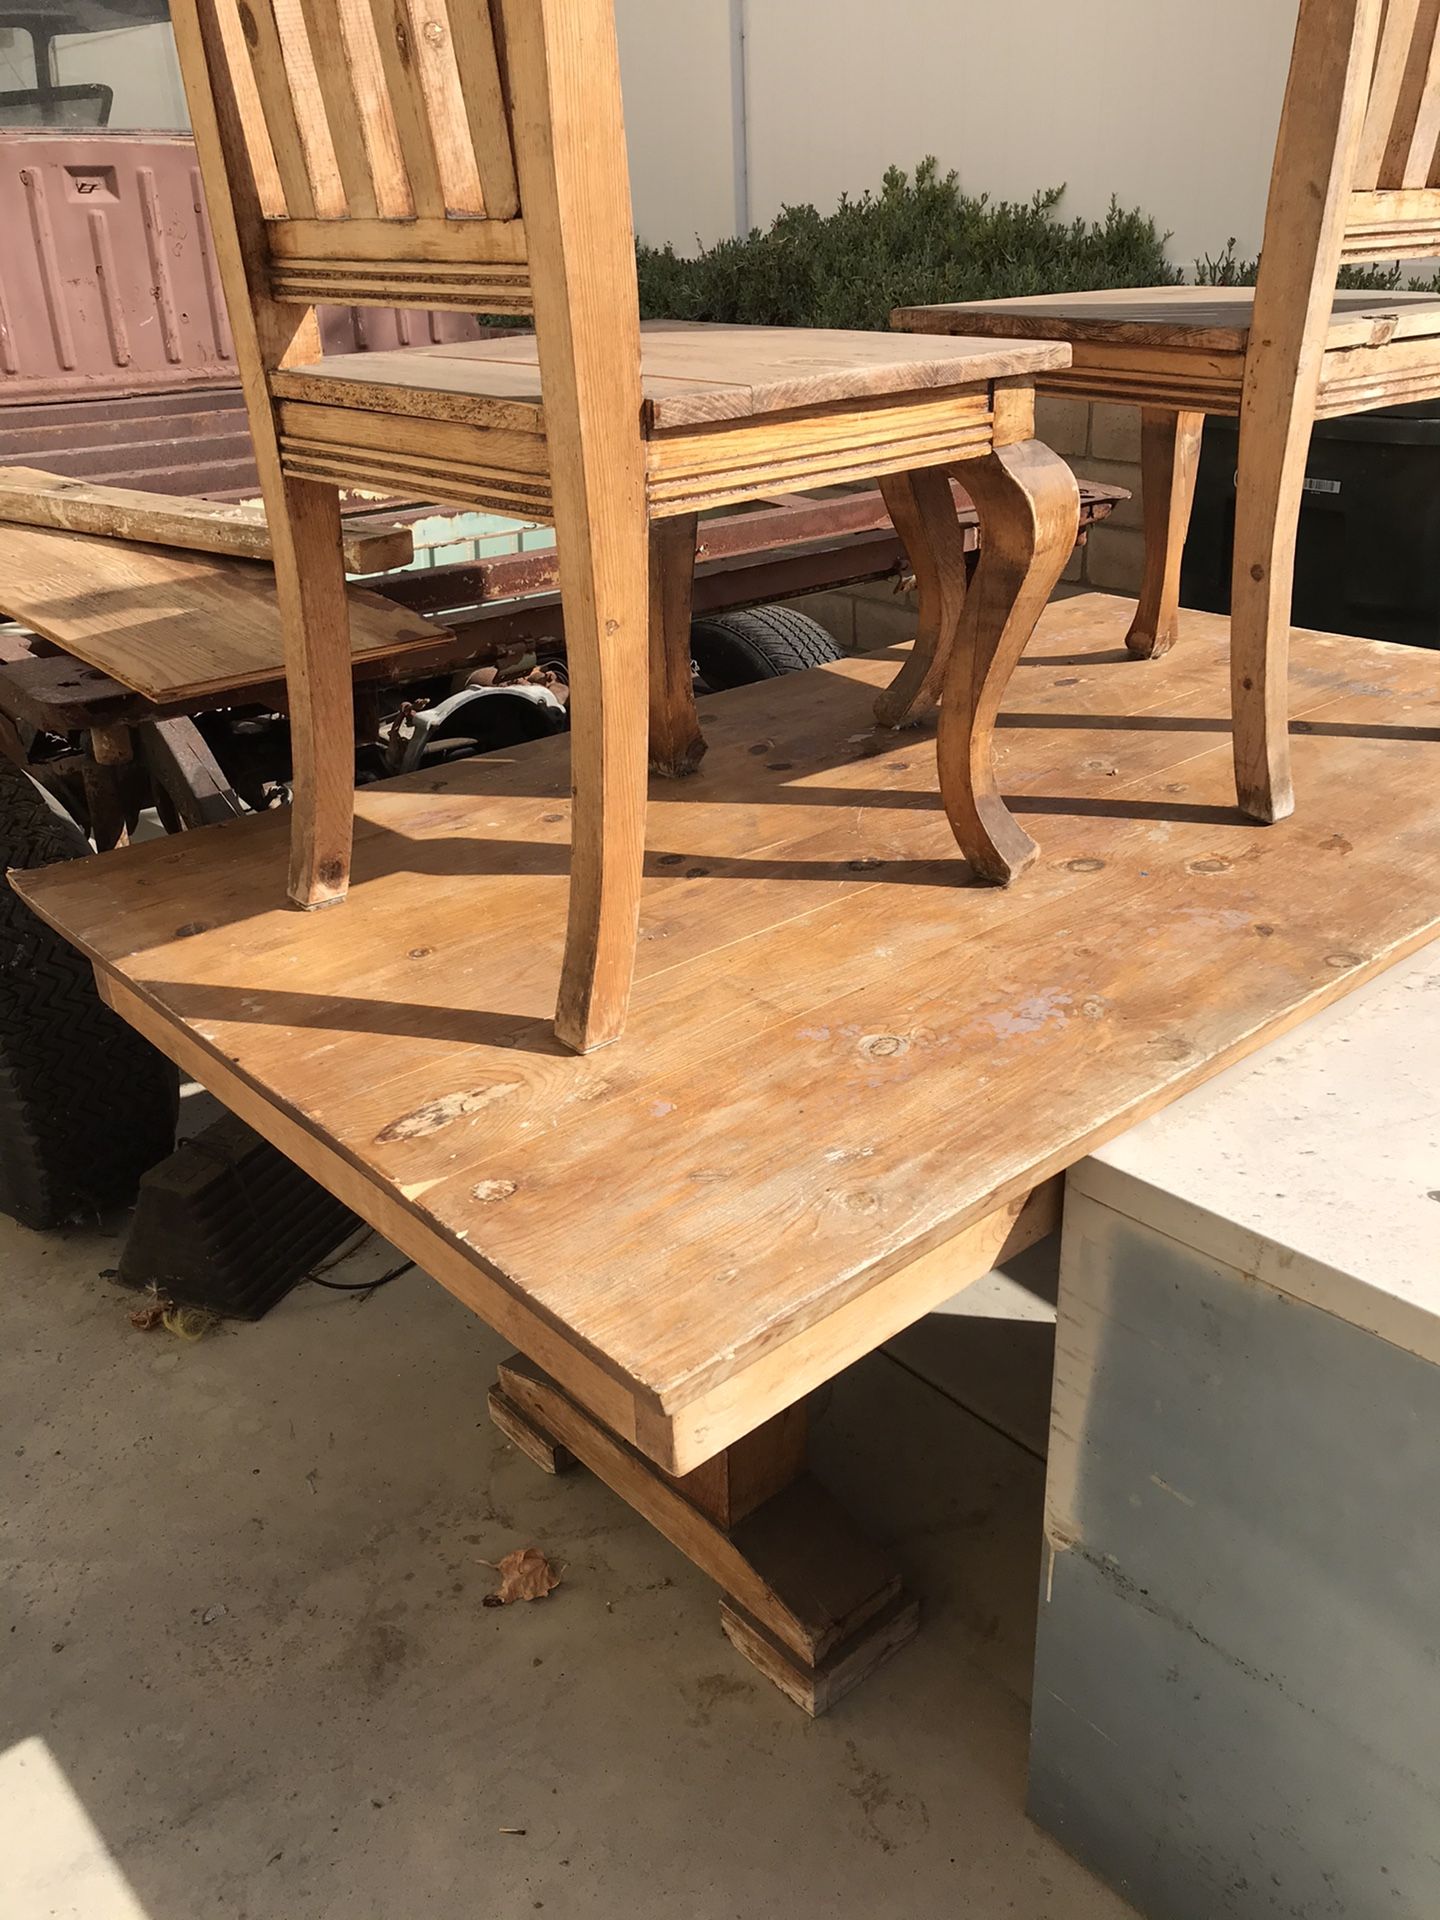 HUGE wooden table